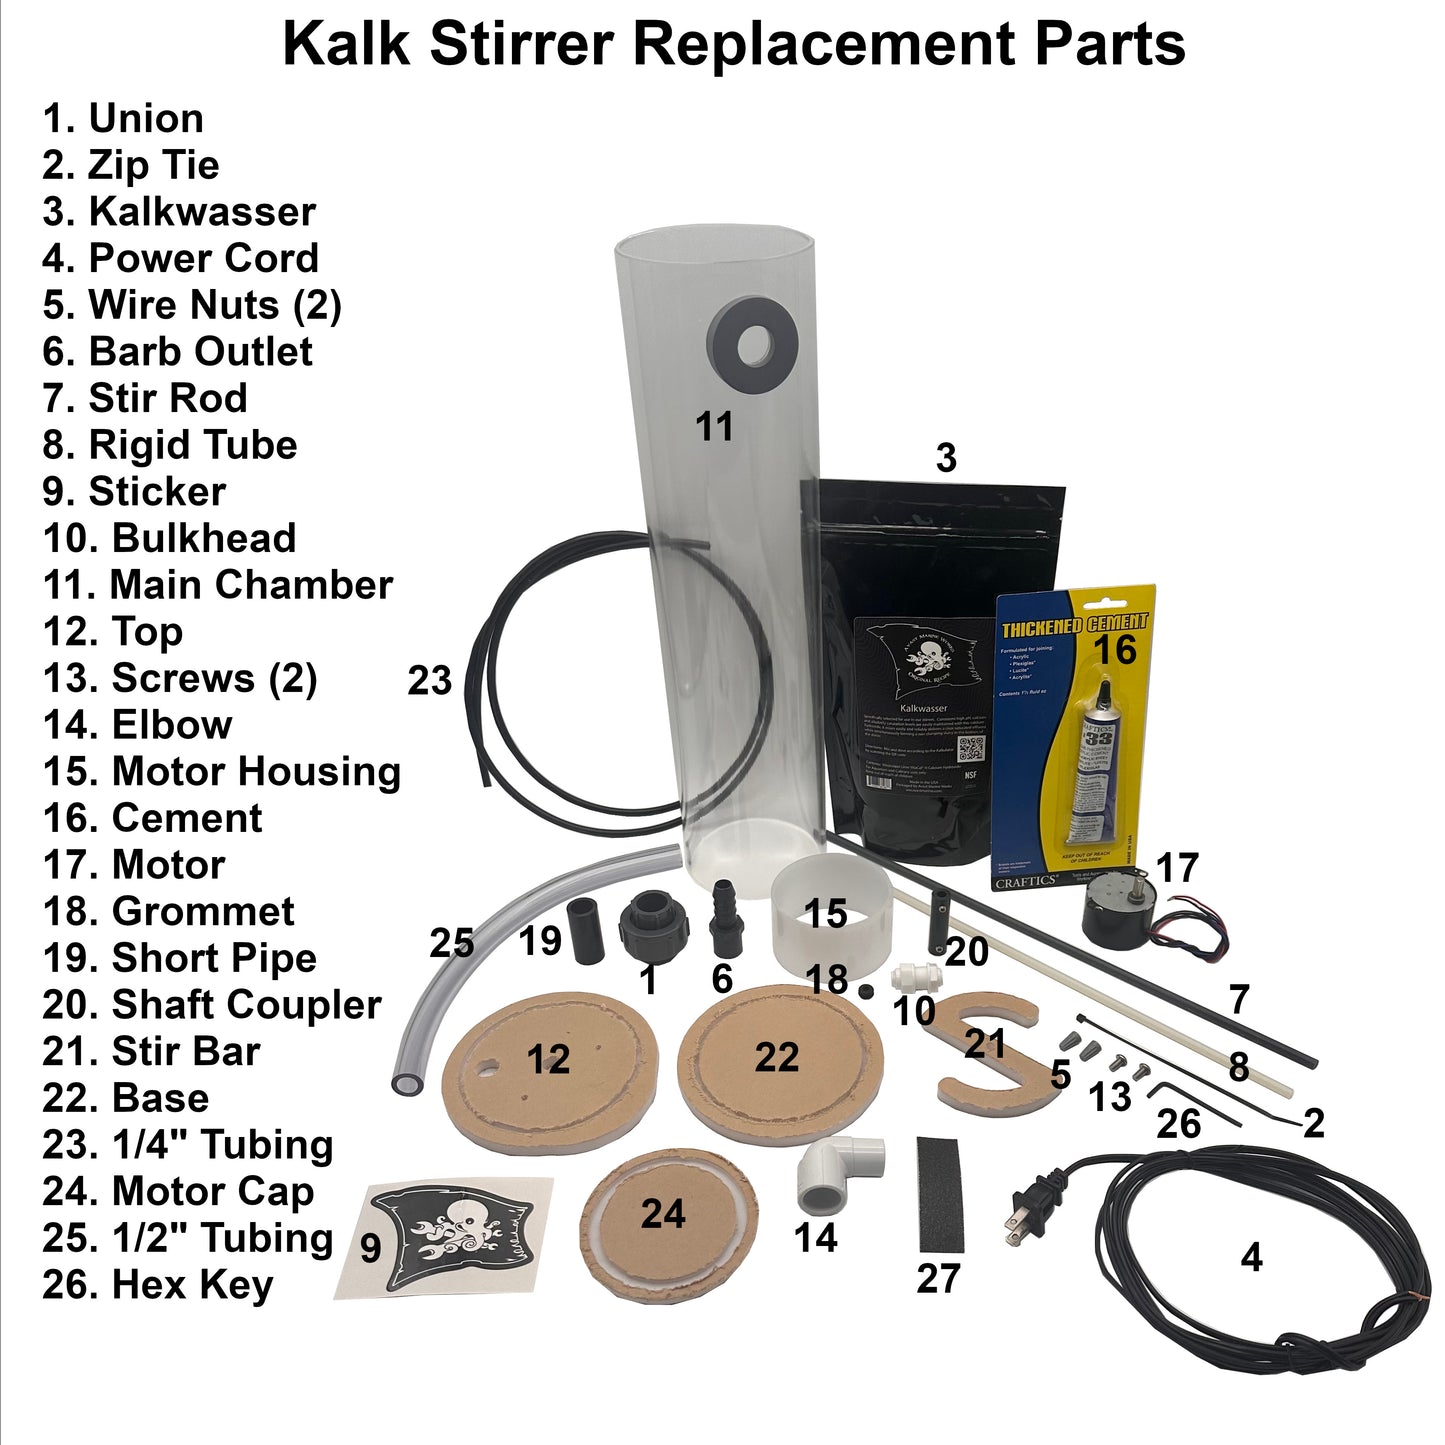 Kalk Stirrer Replacement Parts